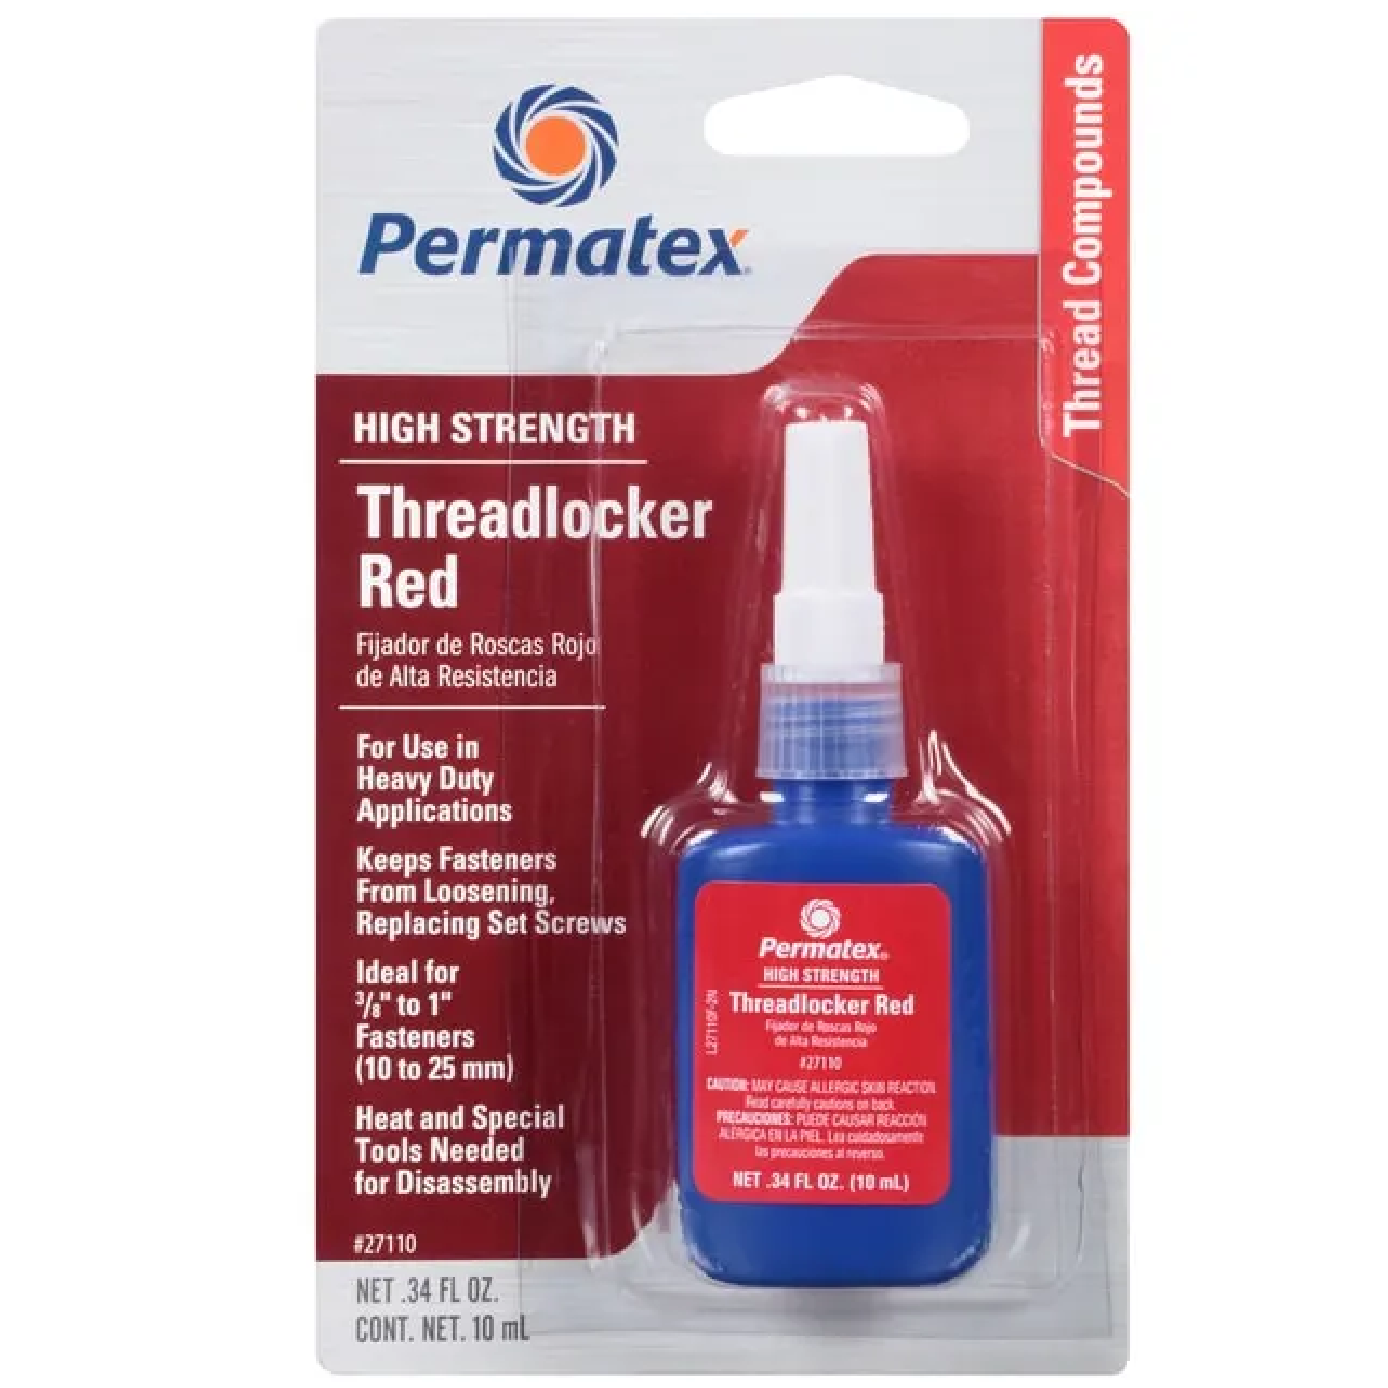 Permatex 27110 HIGH STRENGTH Threadlocker RED 10ML